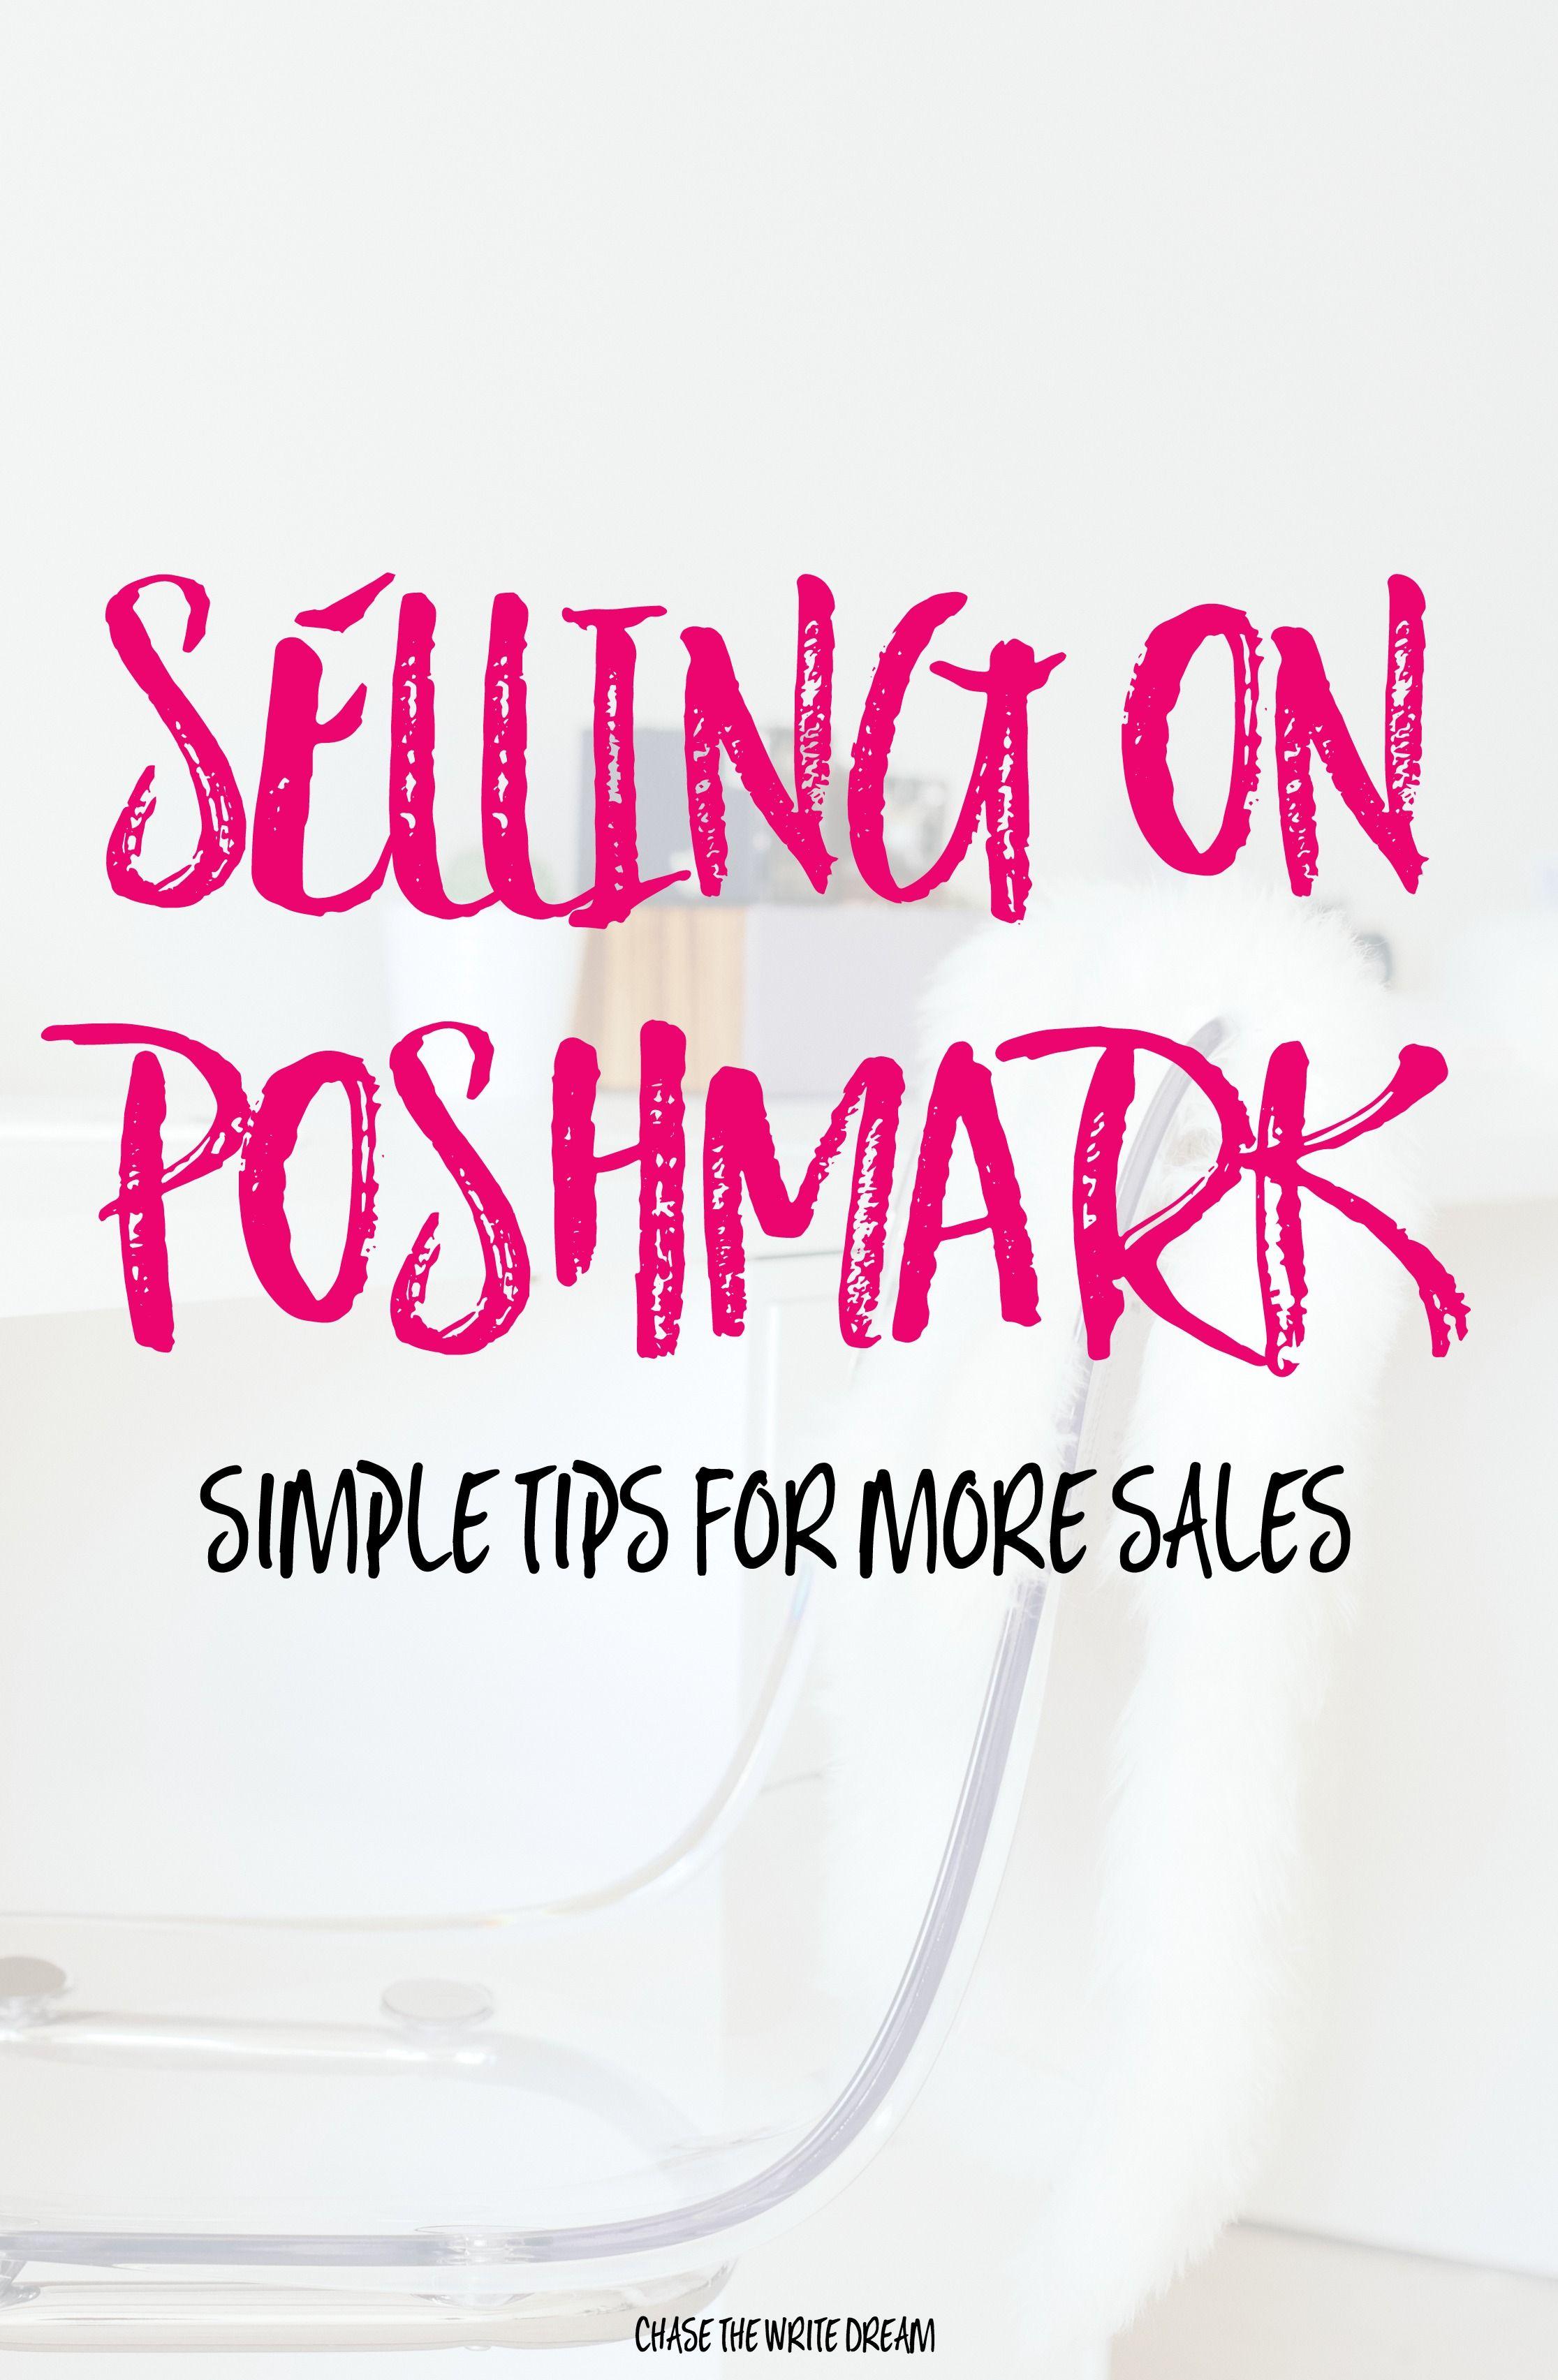 Poshmark Clothing Logo - Selling on Poshmark: Simple Tips for More Sales